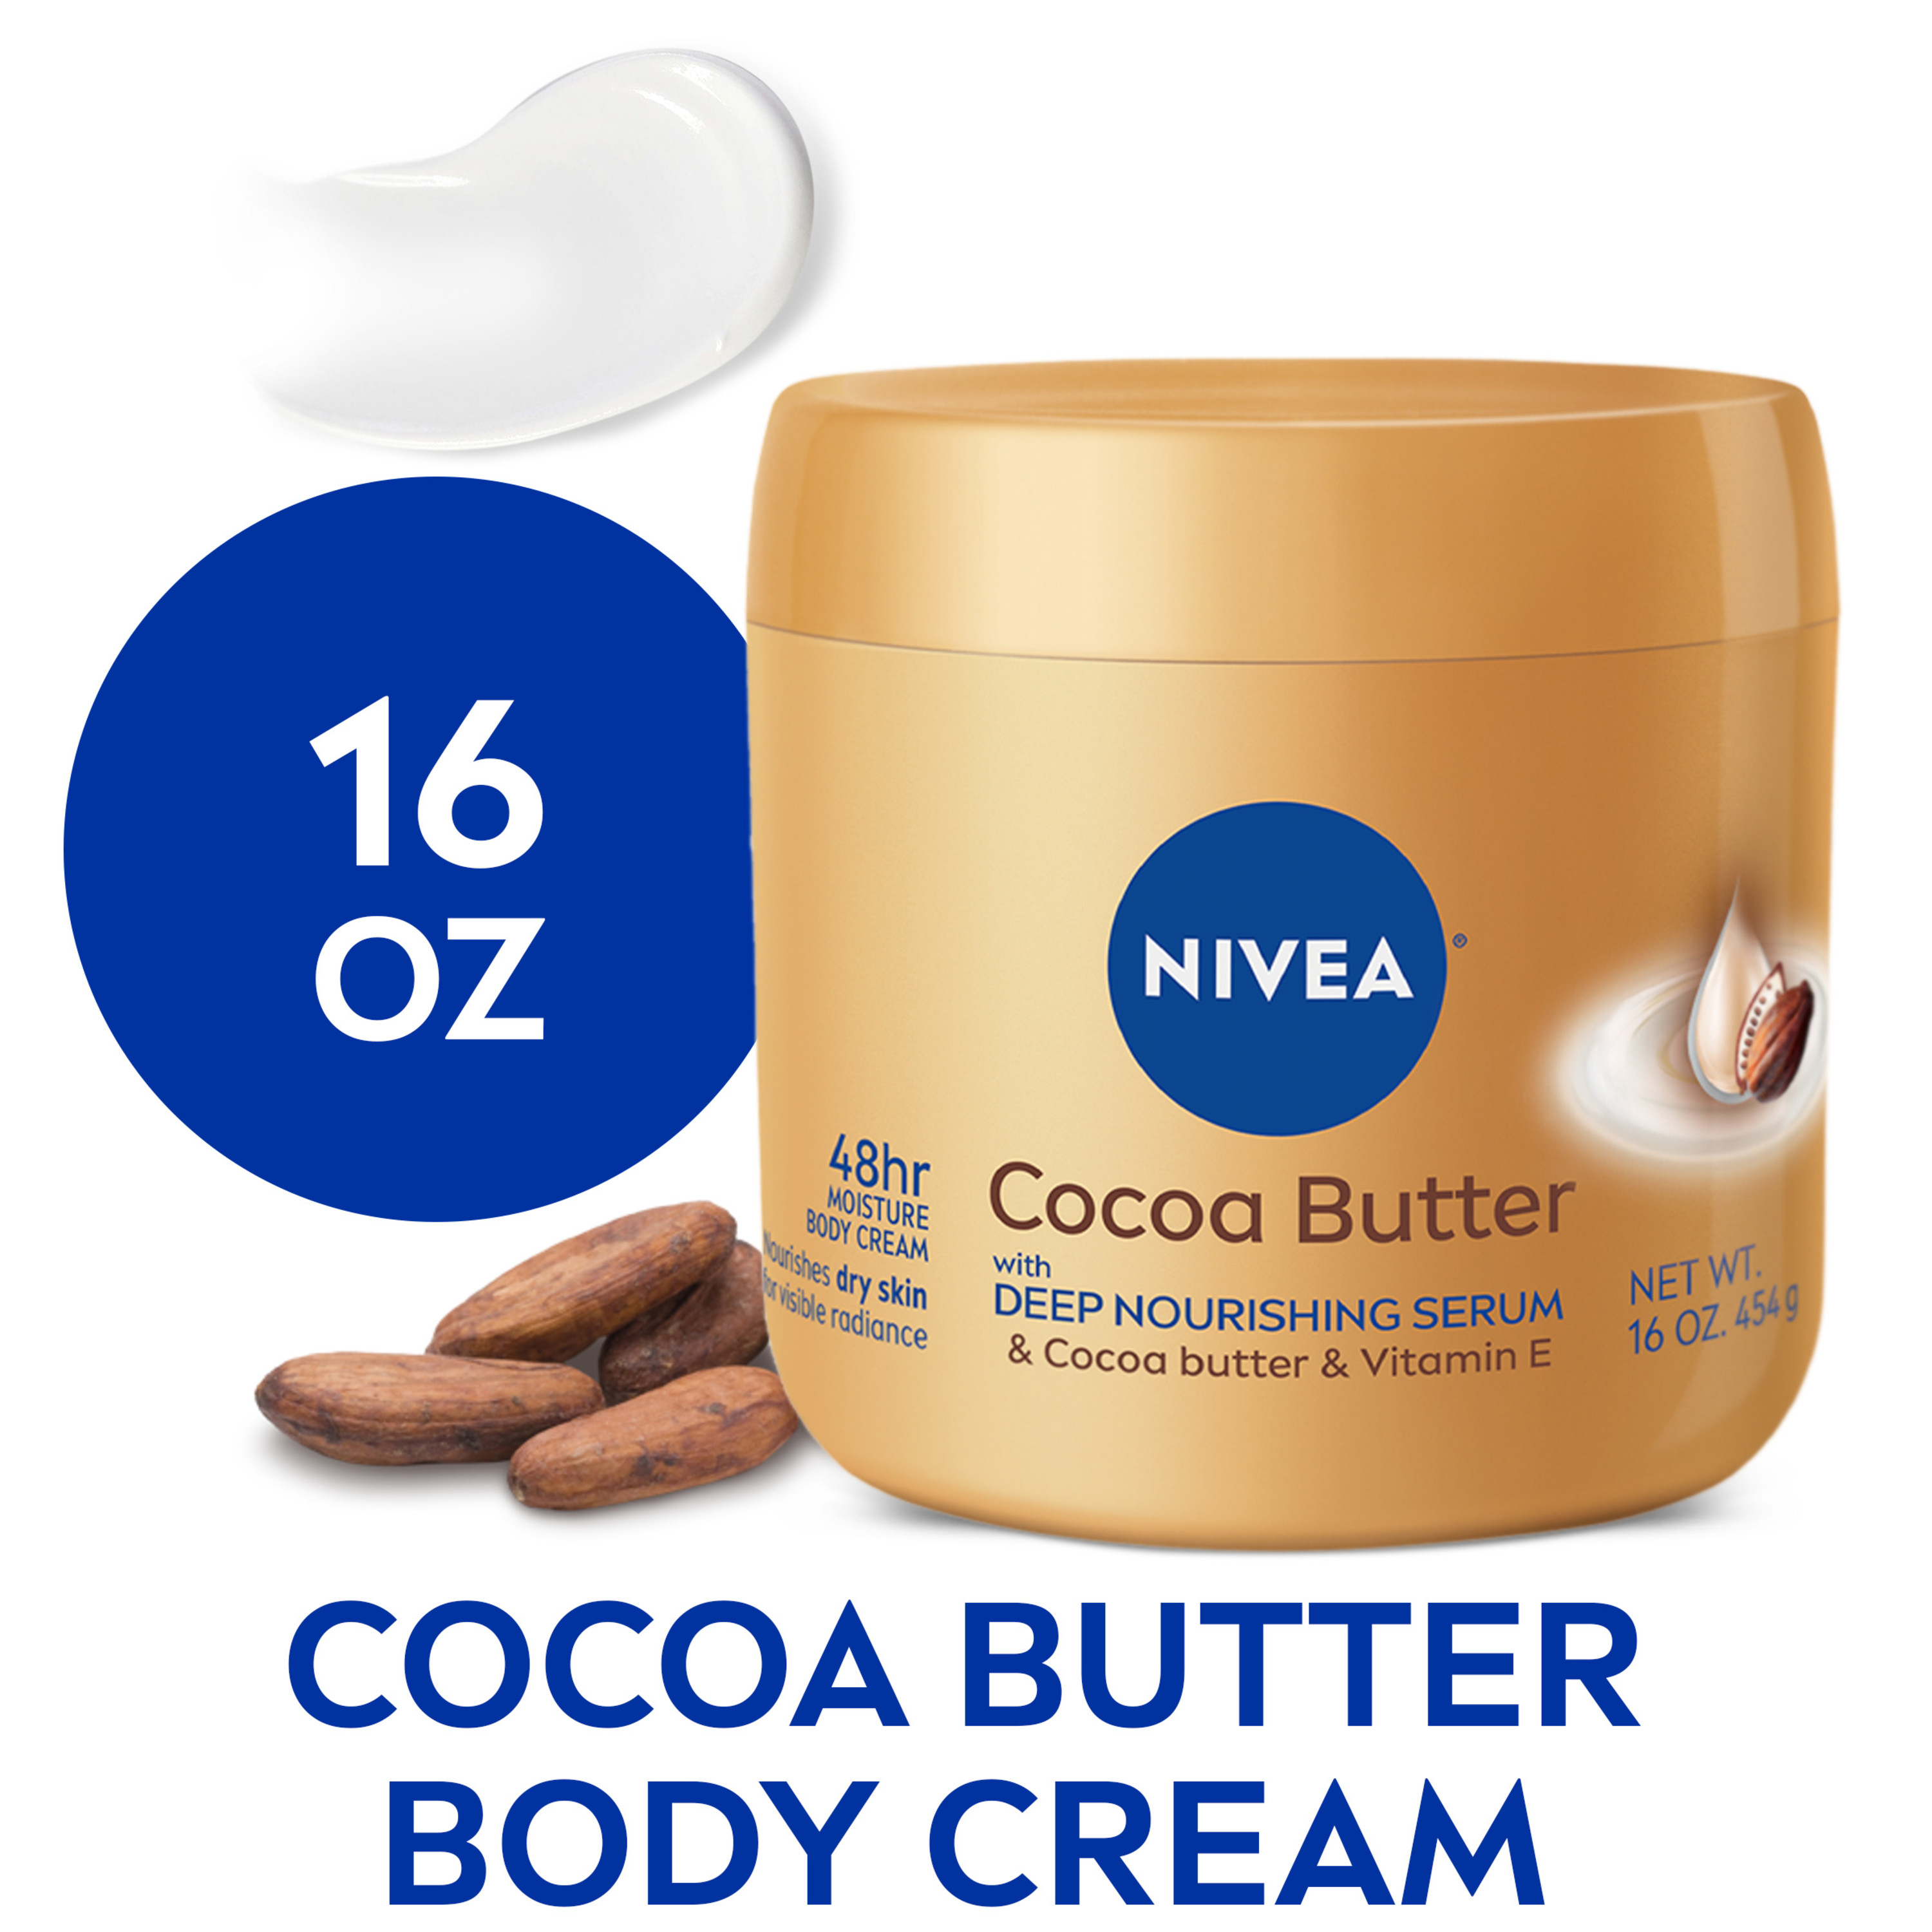 NIVEA Cocoa Butter Body Cream with Deep Nourishing Serum, 16 Ounce - image 1 of 13